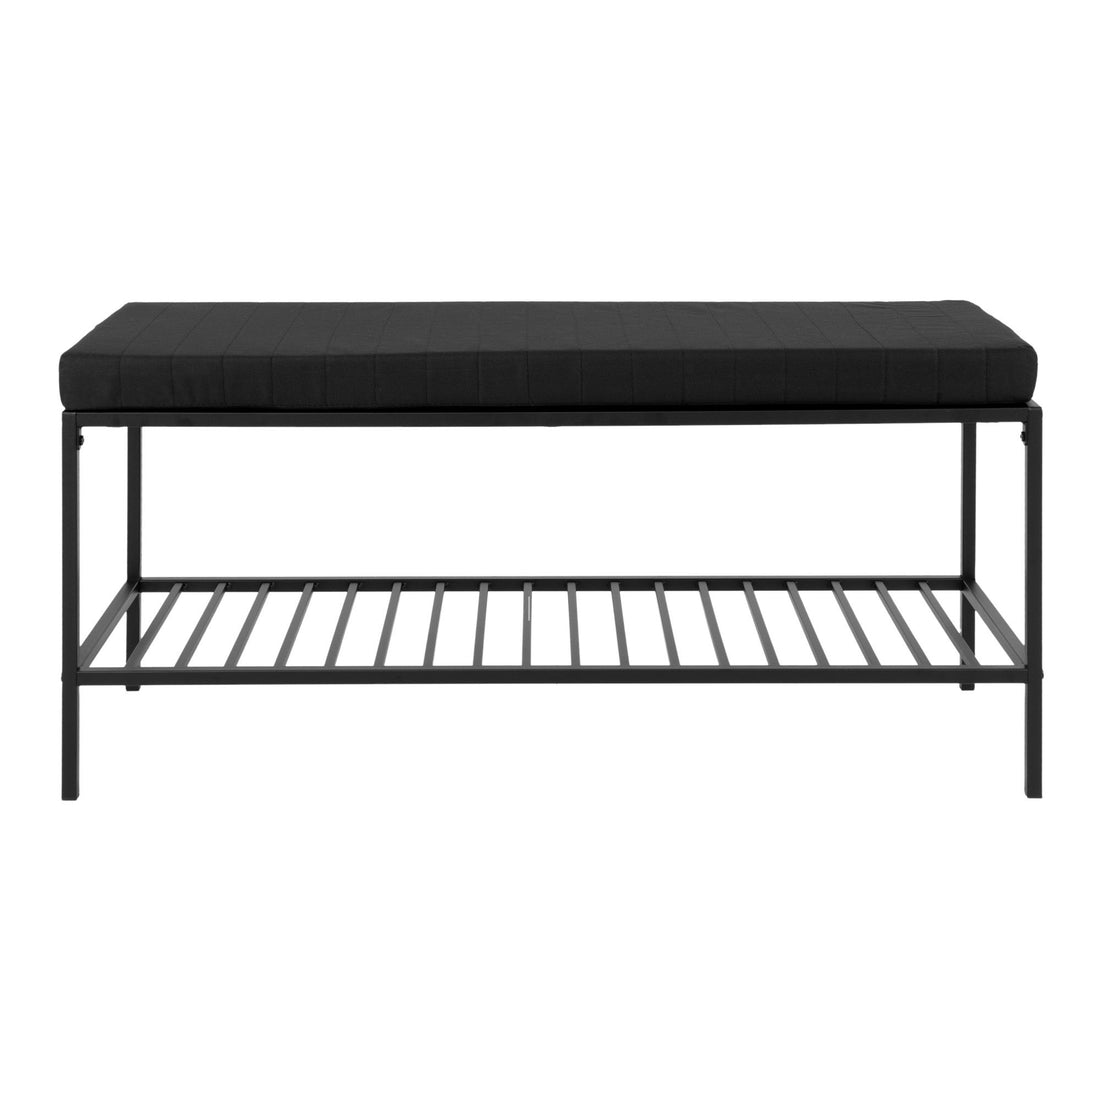 Vita bench - bench in black frame and a black shelf and cushion - 1 - pcs